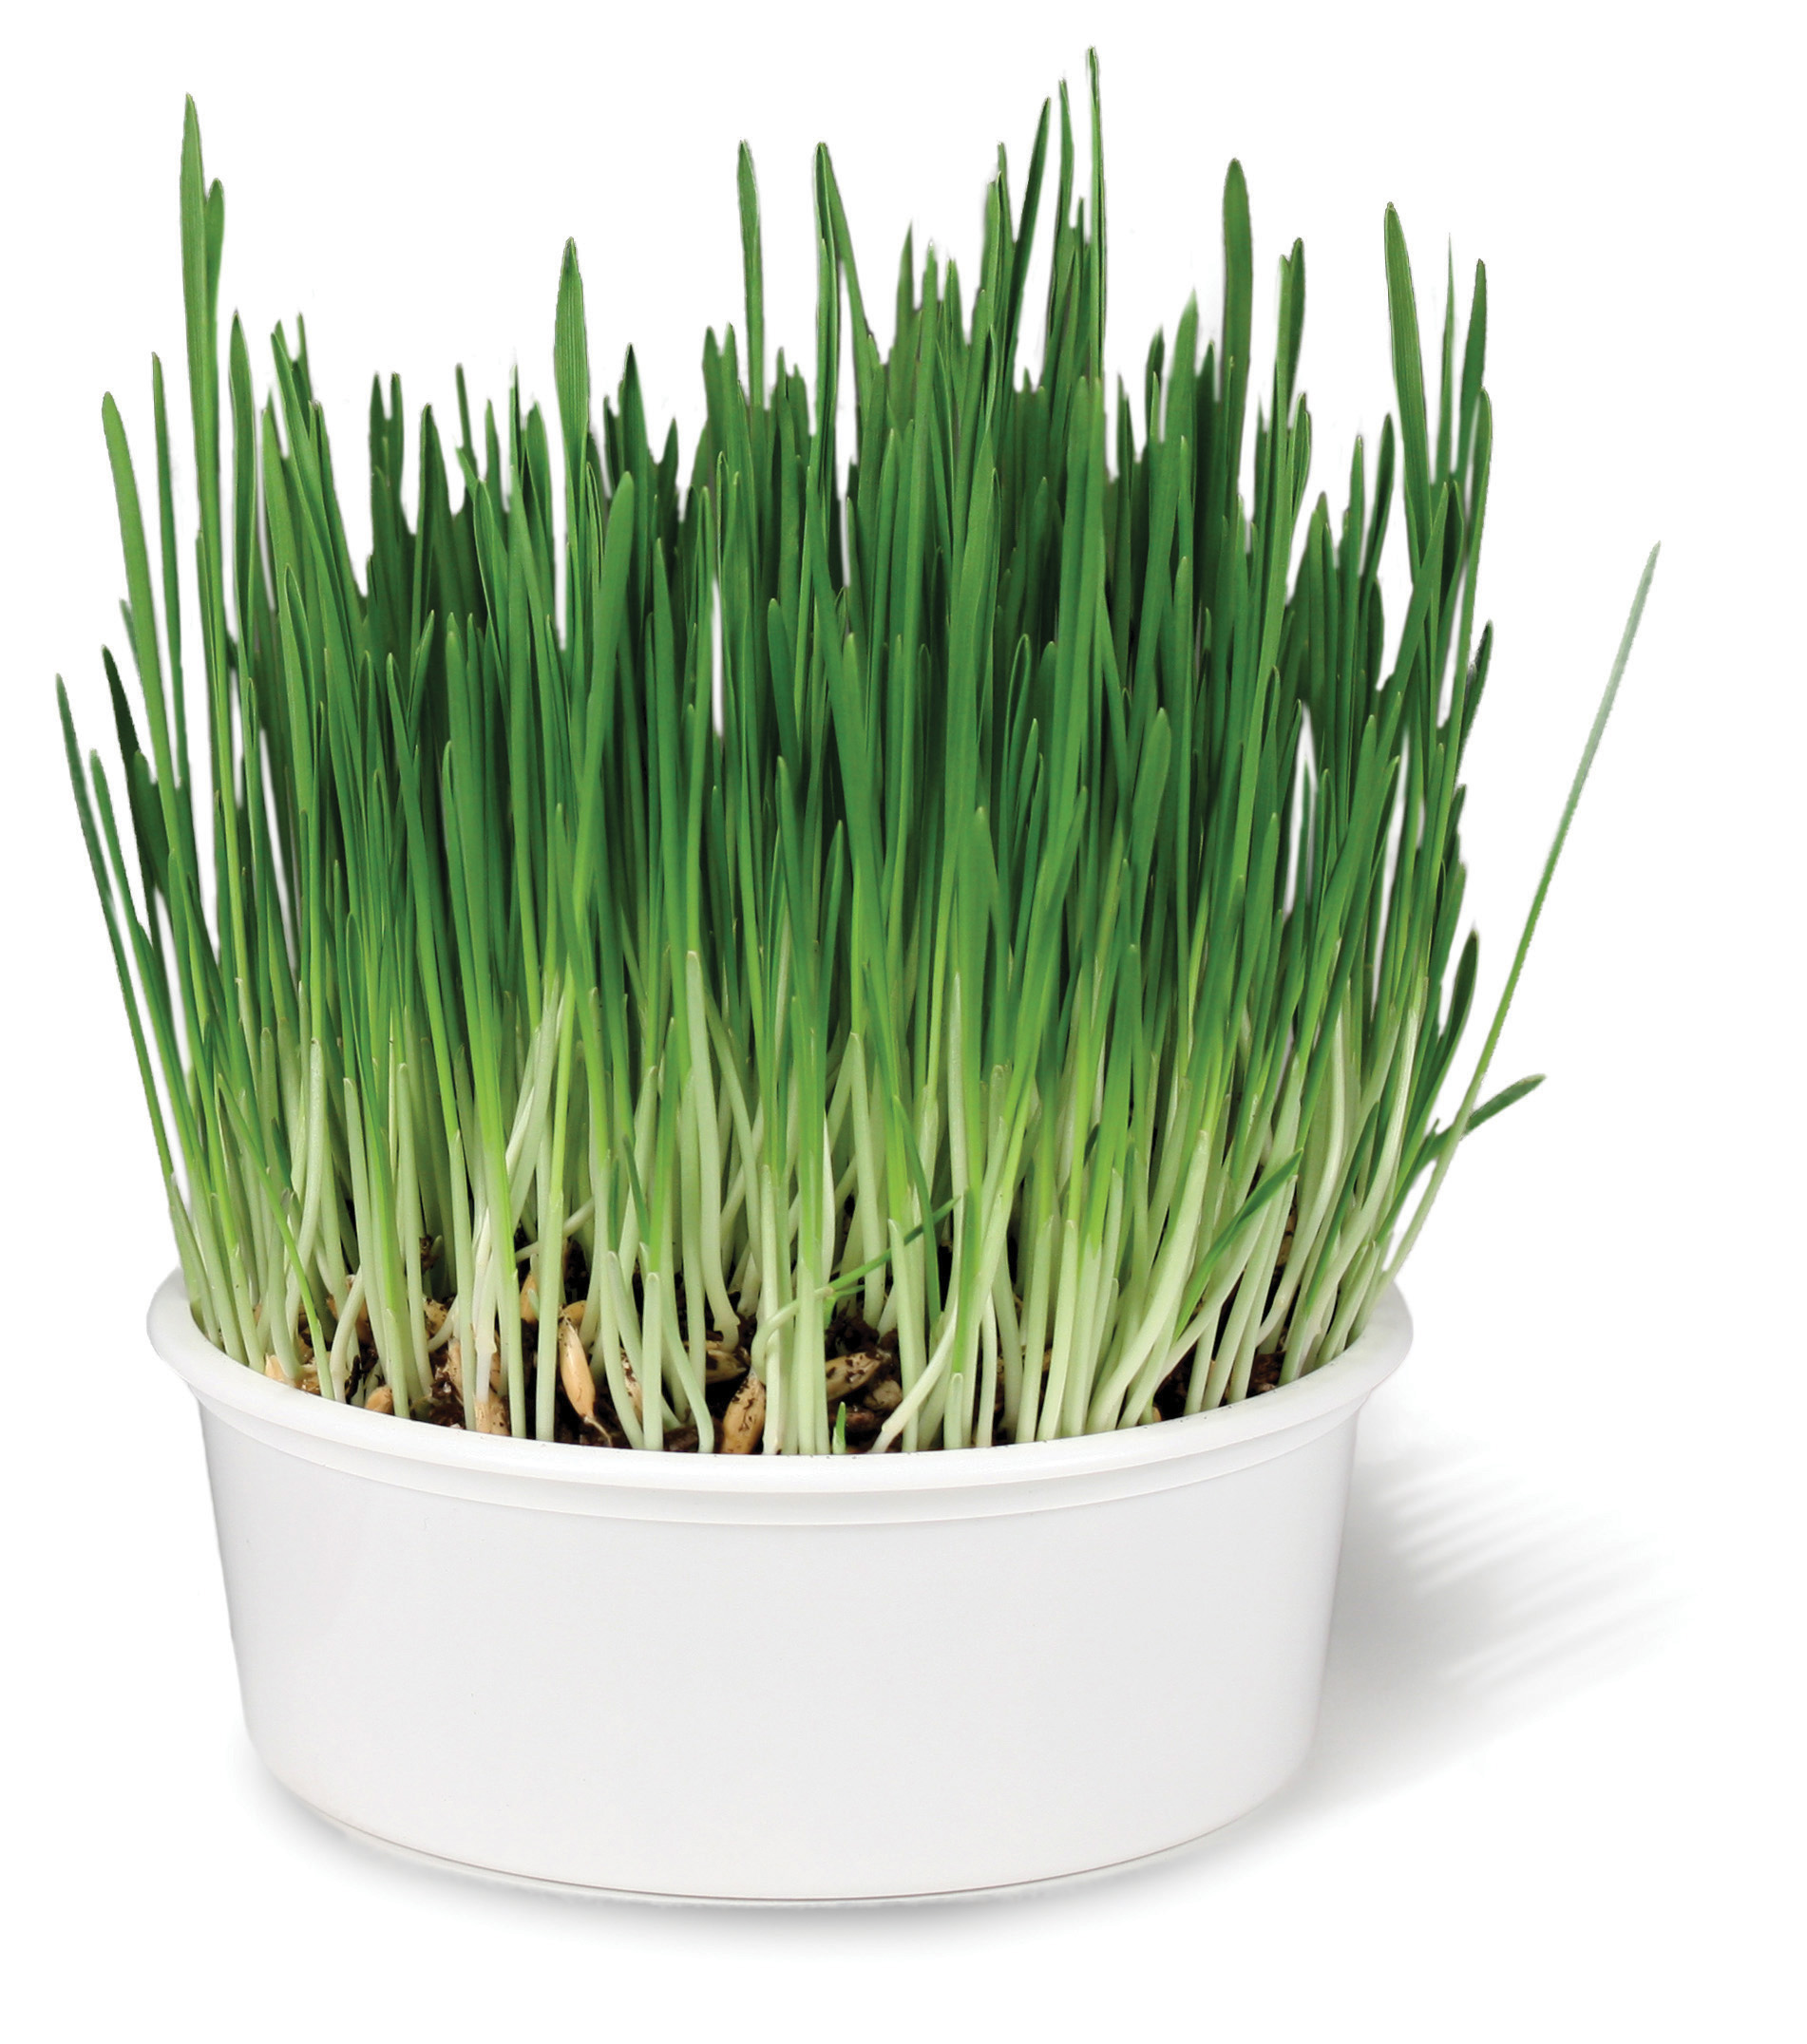 SmartyKat Sweet Greens Easy-to-Grow Cat Grass Grow Kit - image 1 of 2